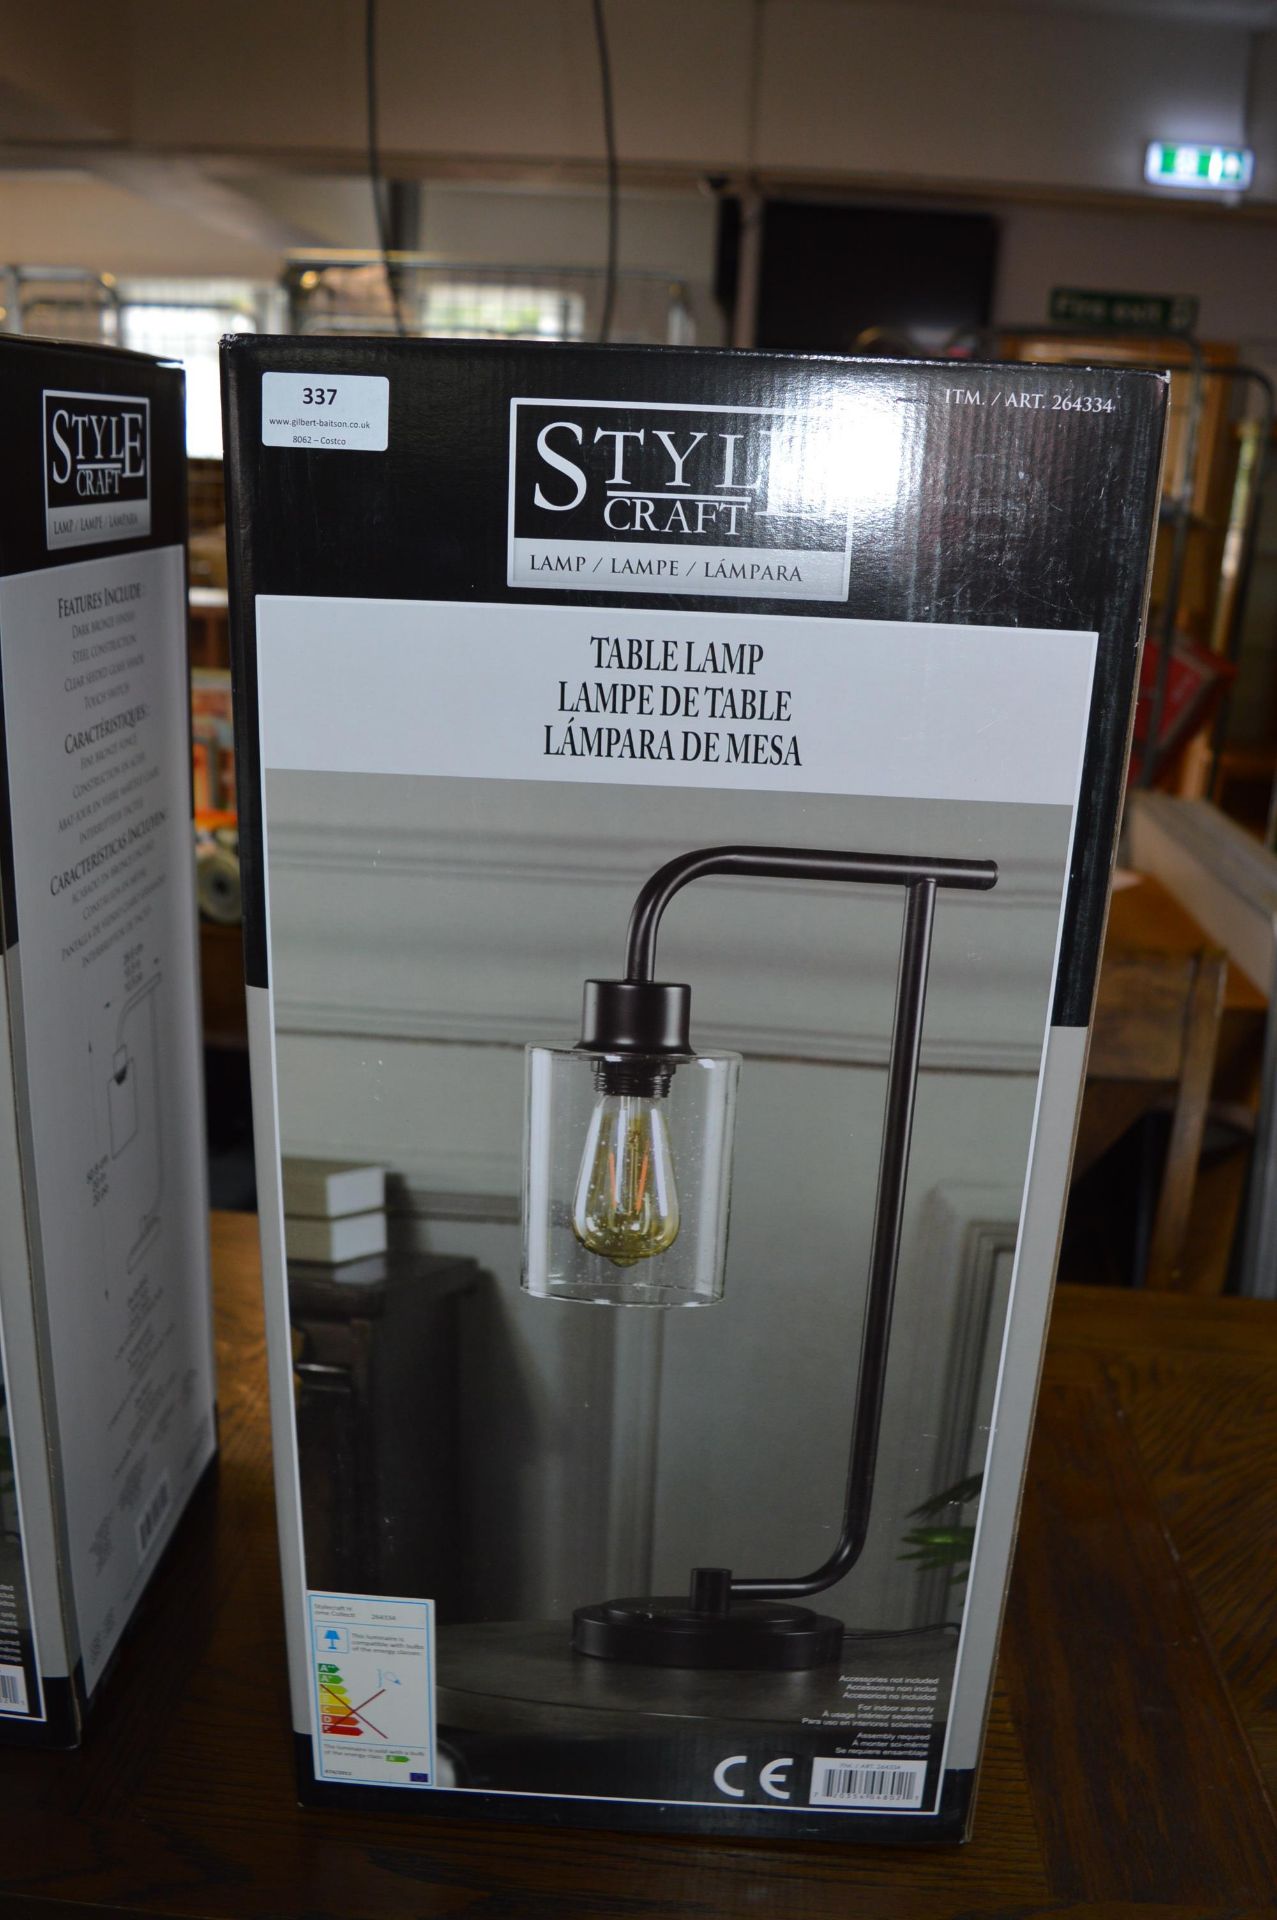 *Stylecraft Table Lamp